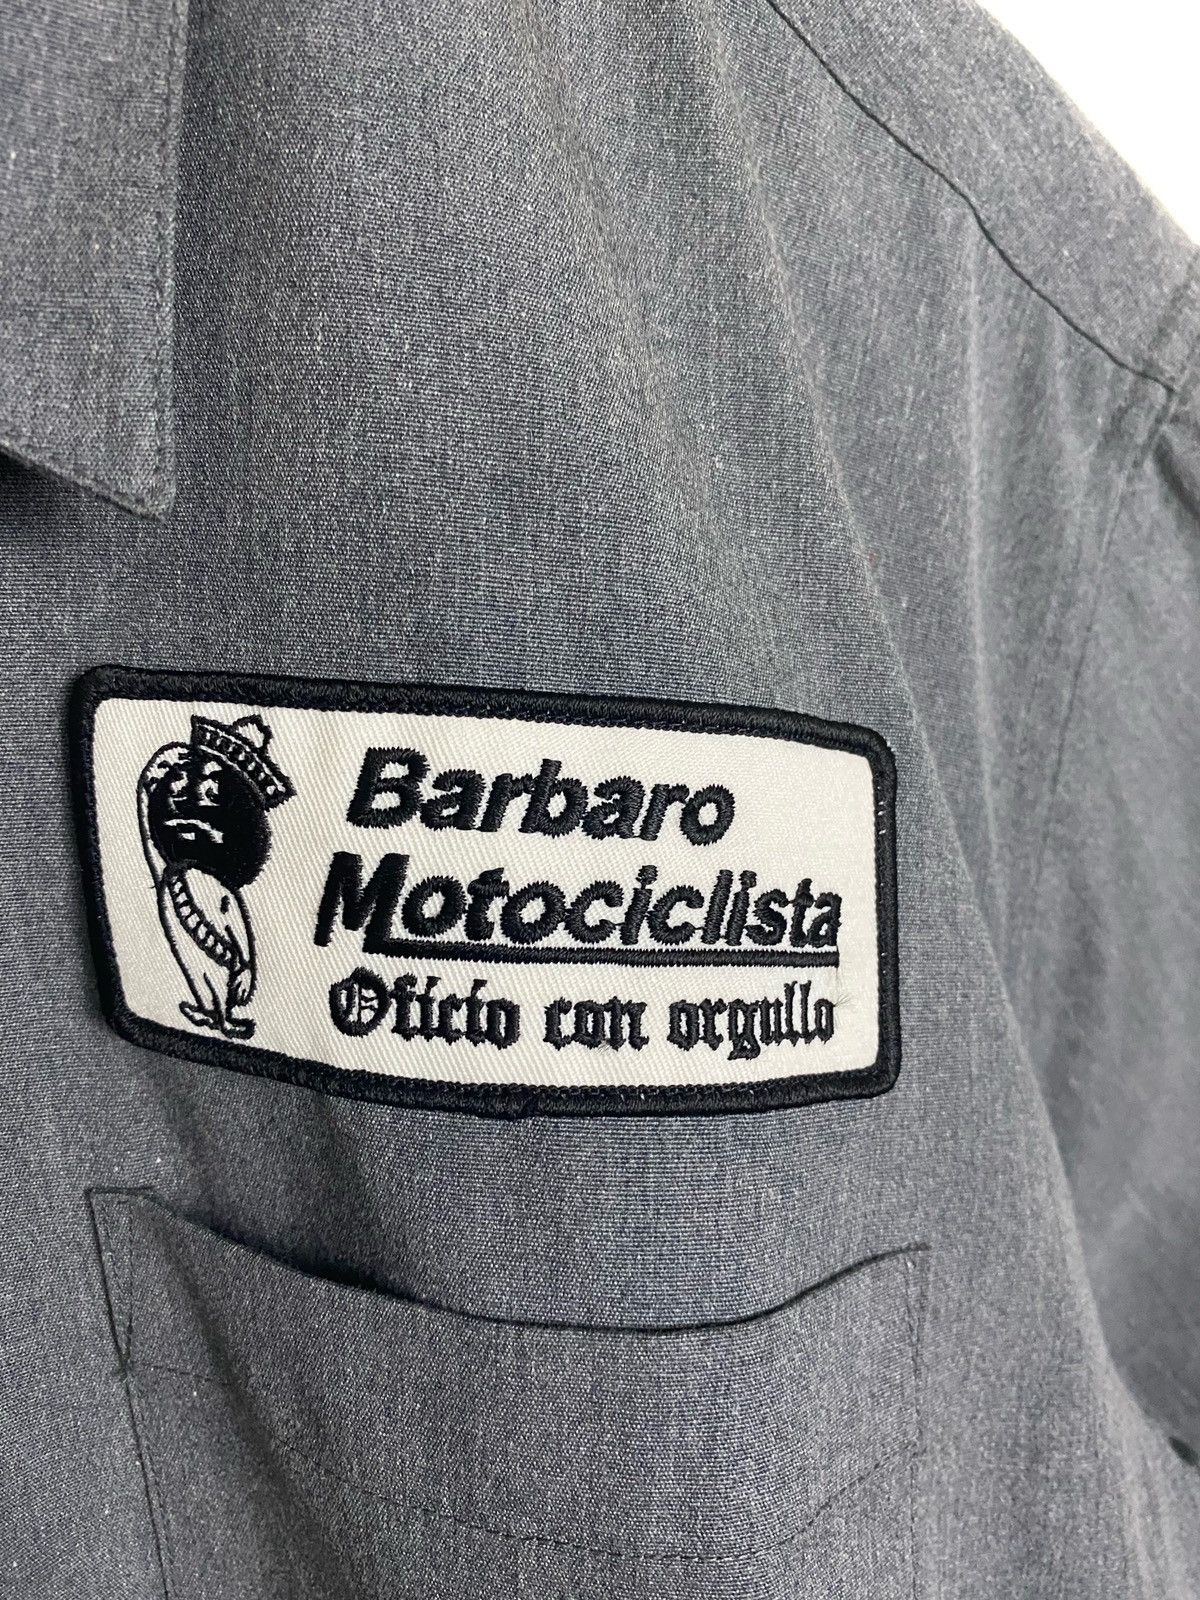 NEIGHBORHOOD Barbaro Motociclista Button Up shirt - 3